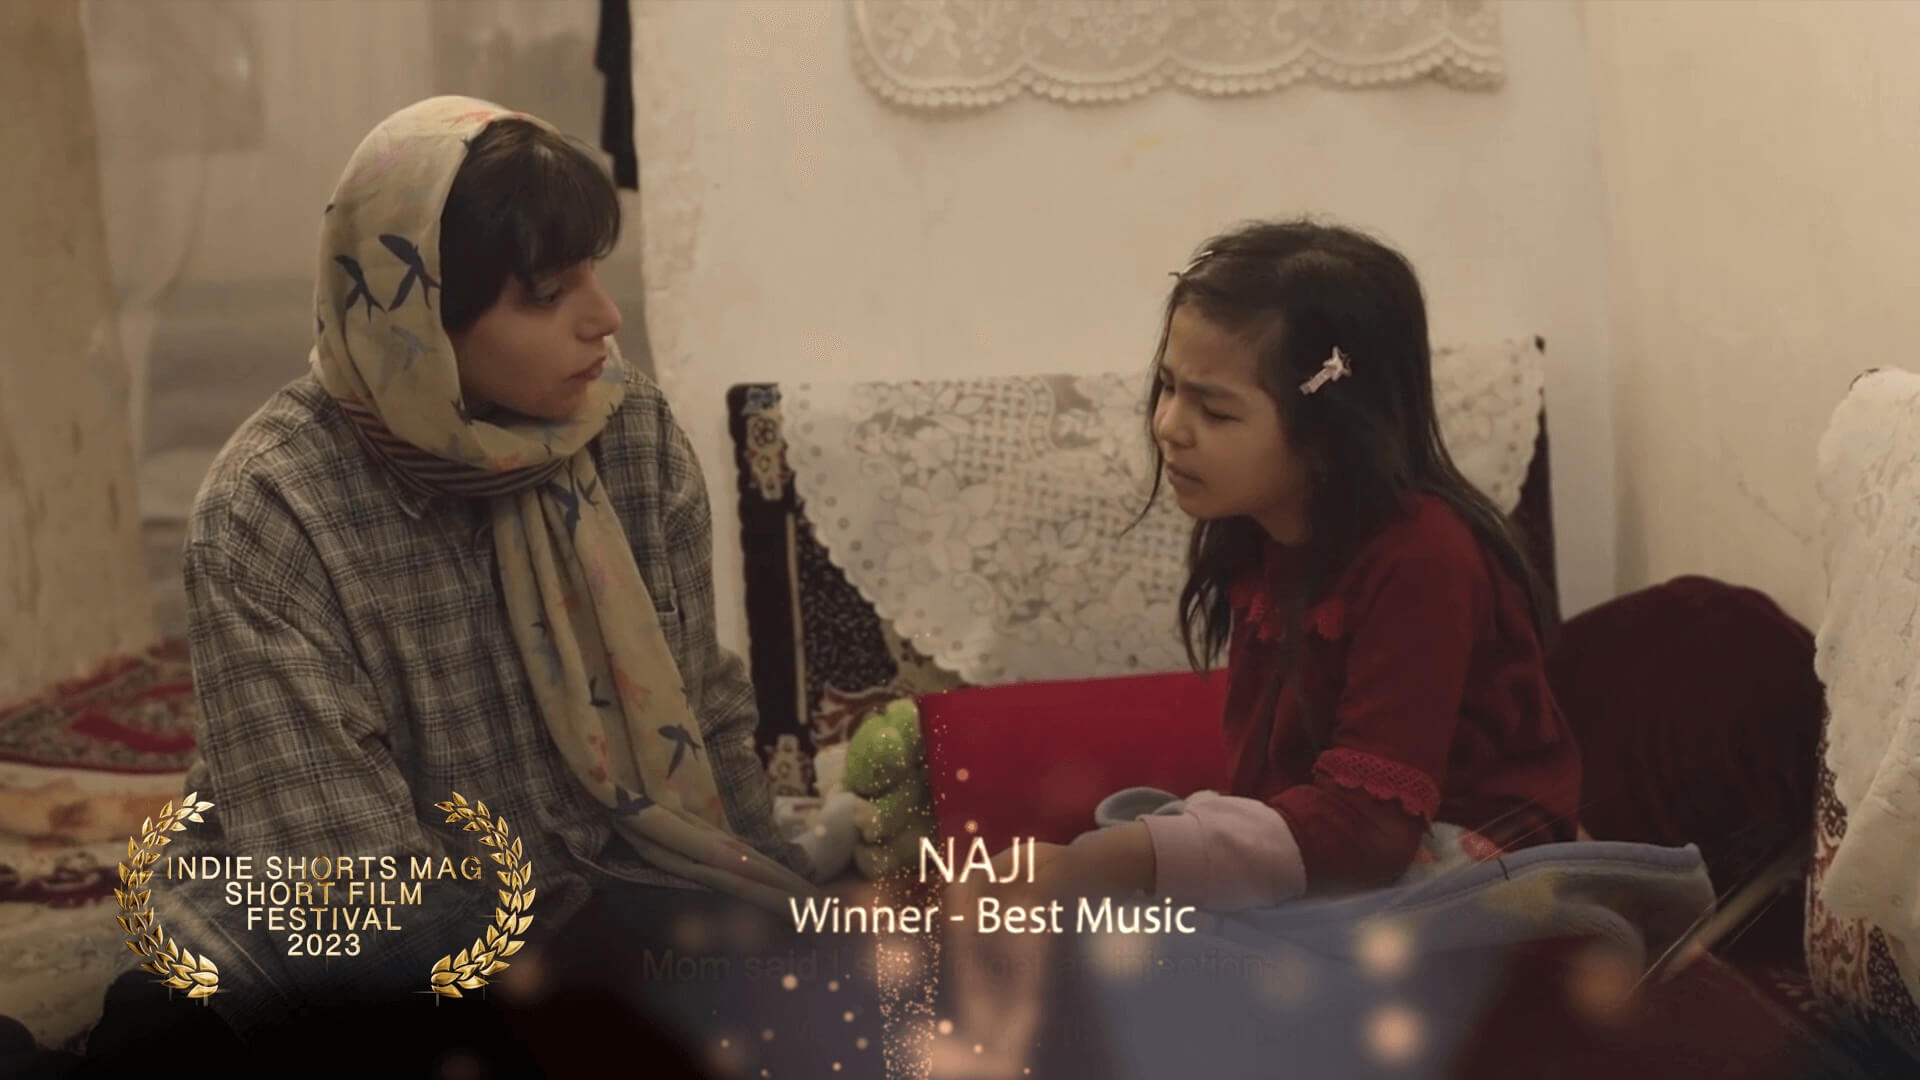 Indie Shorts Mag Short Film Festival - Best Music - Winner - Naji